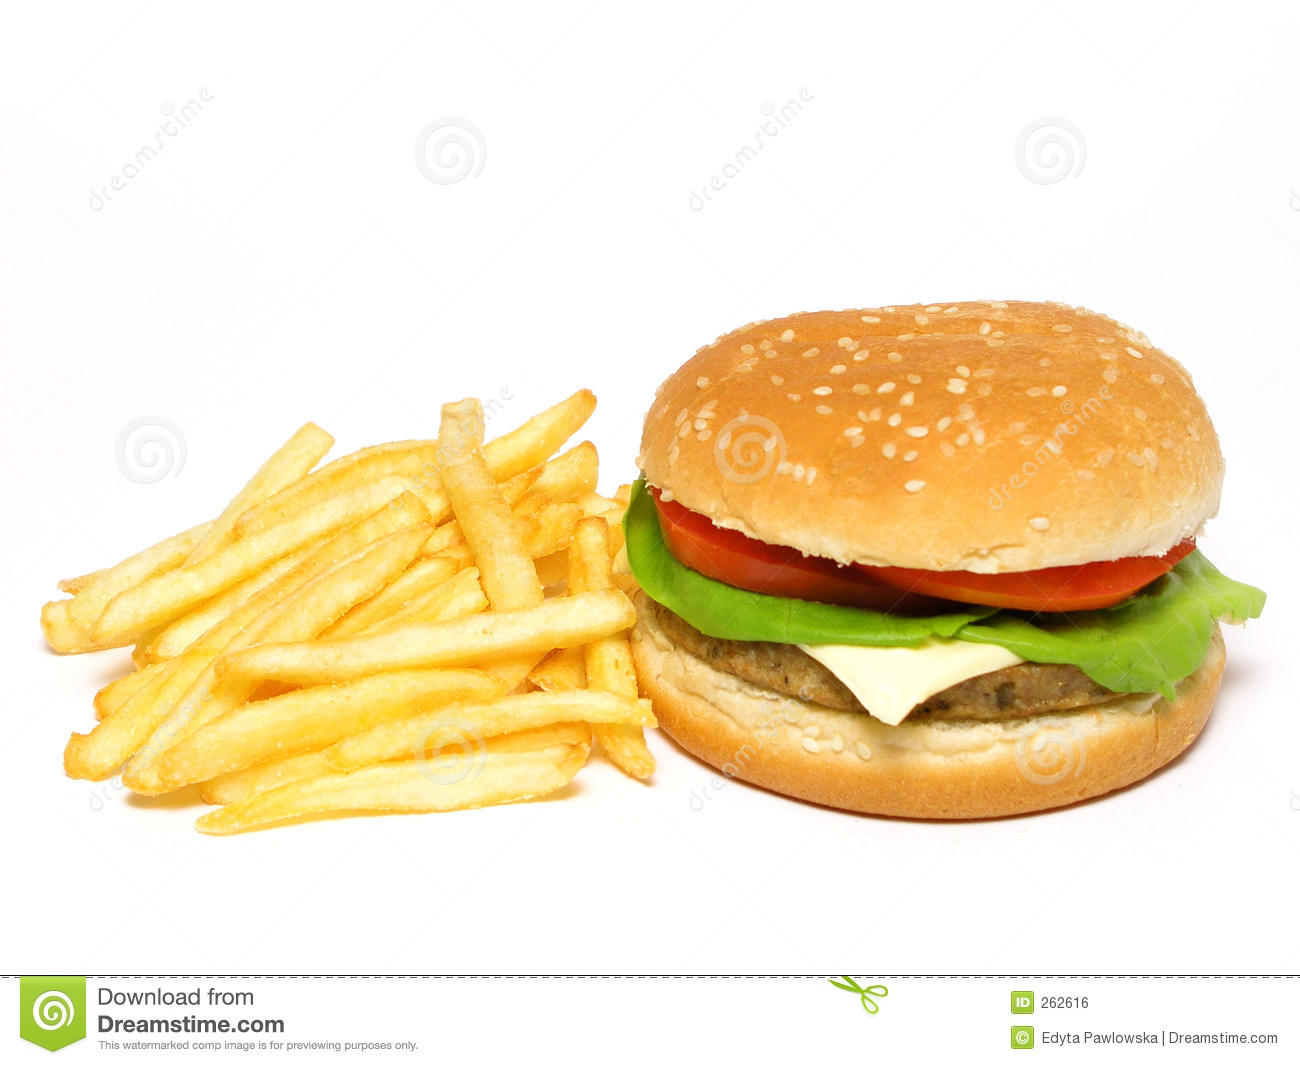 Hamburger And French Fries Royalty Free Stock Image   Image  262616